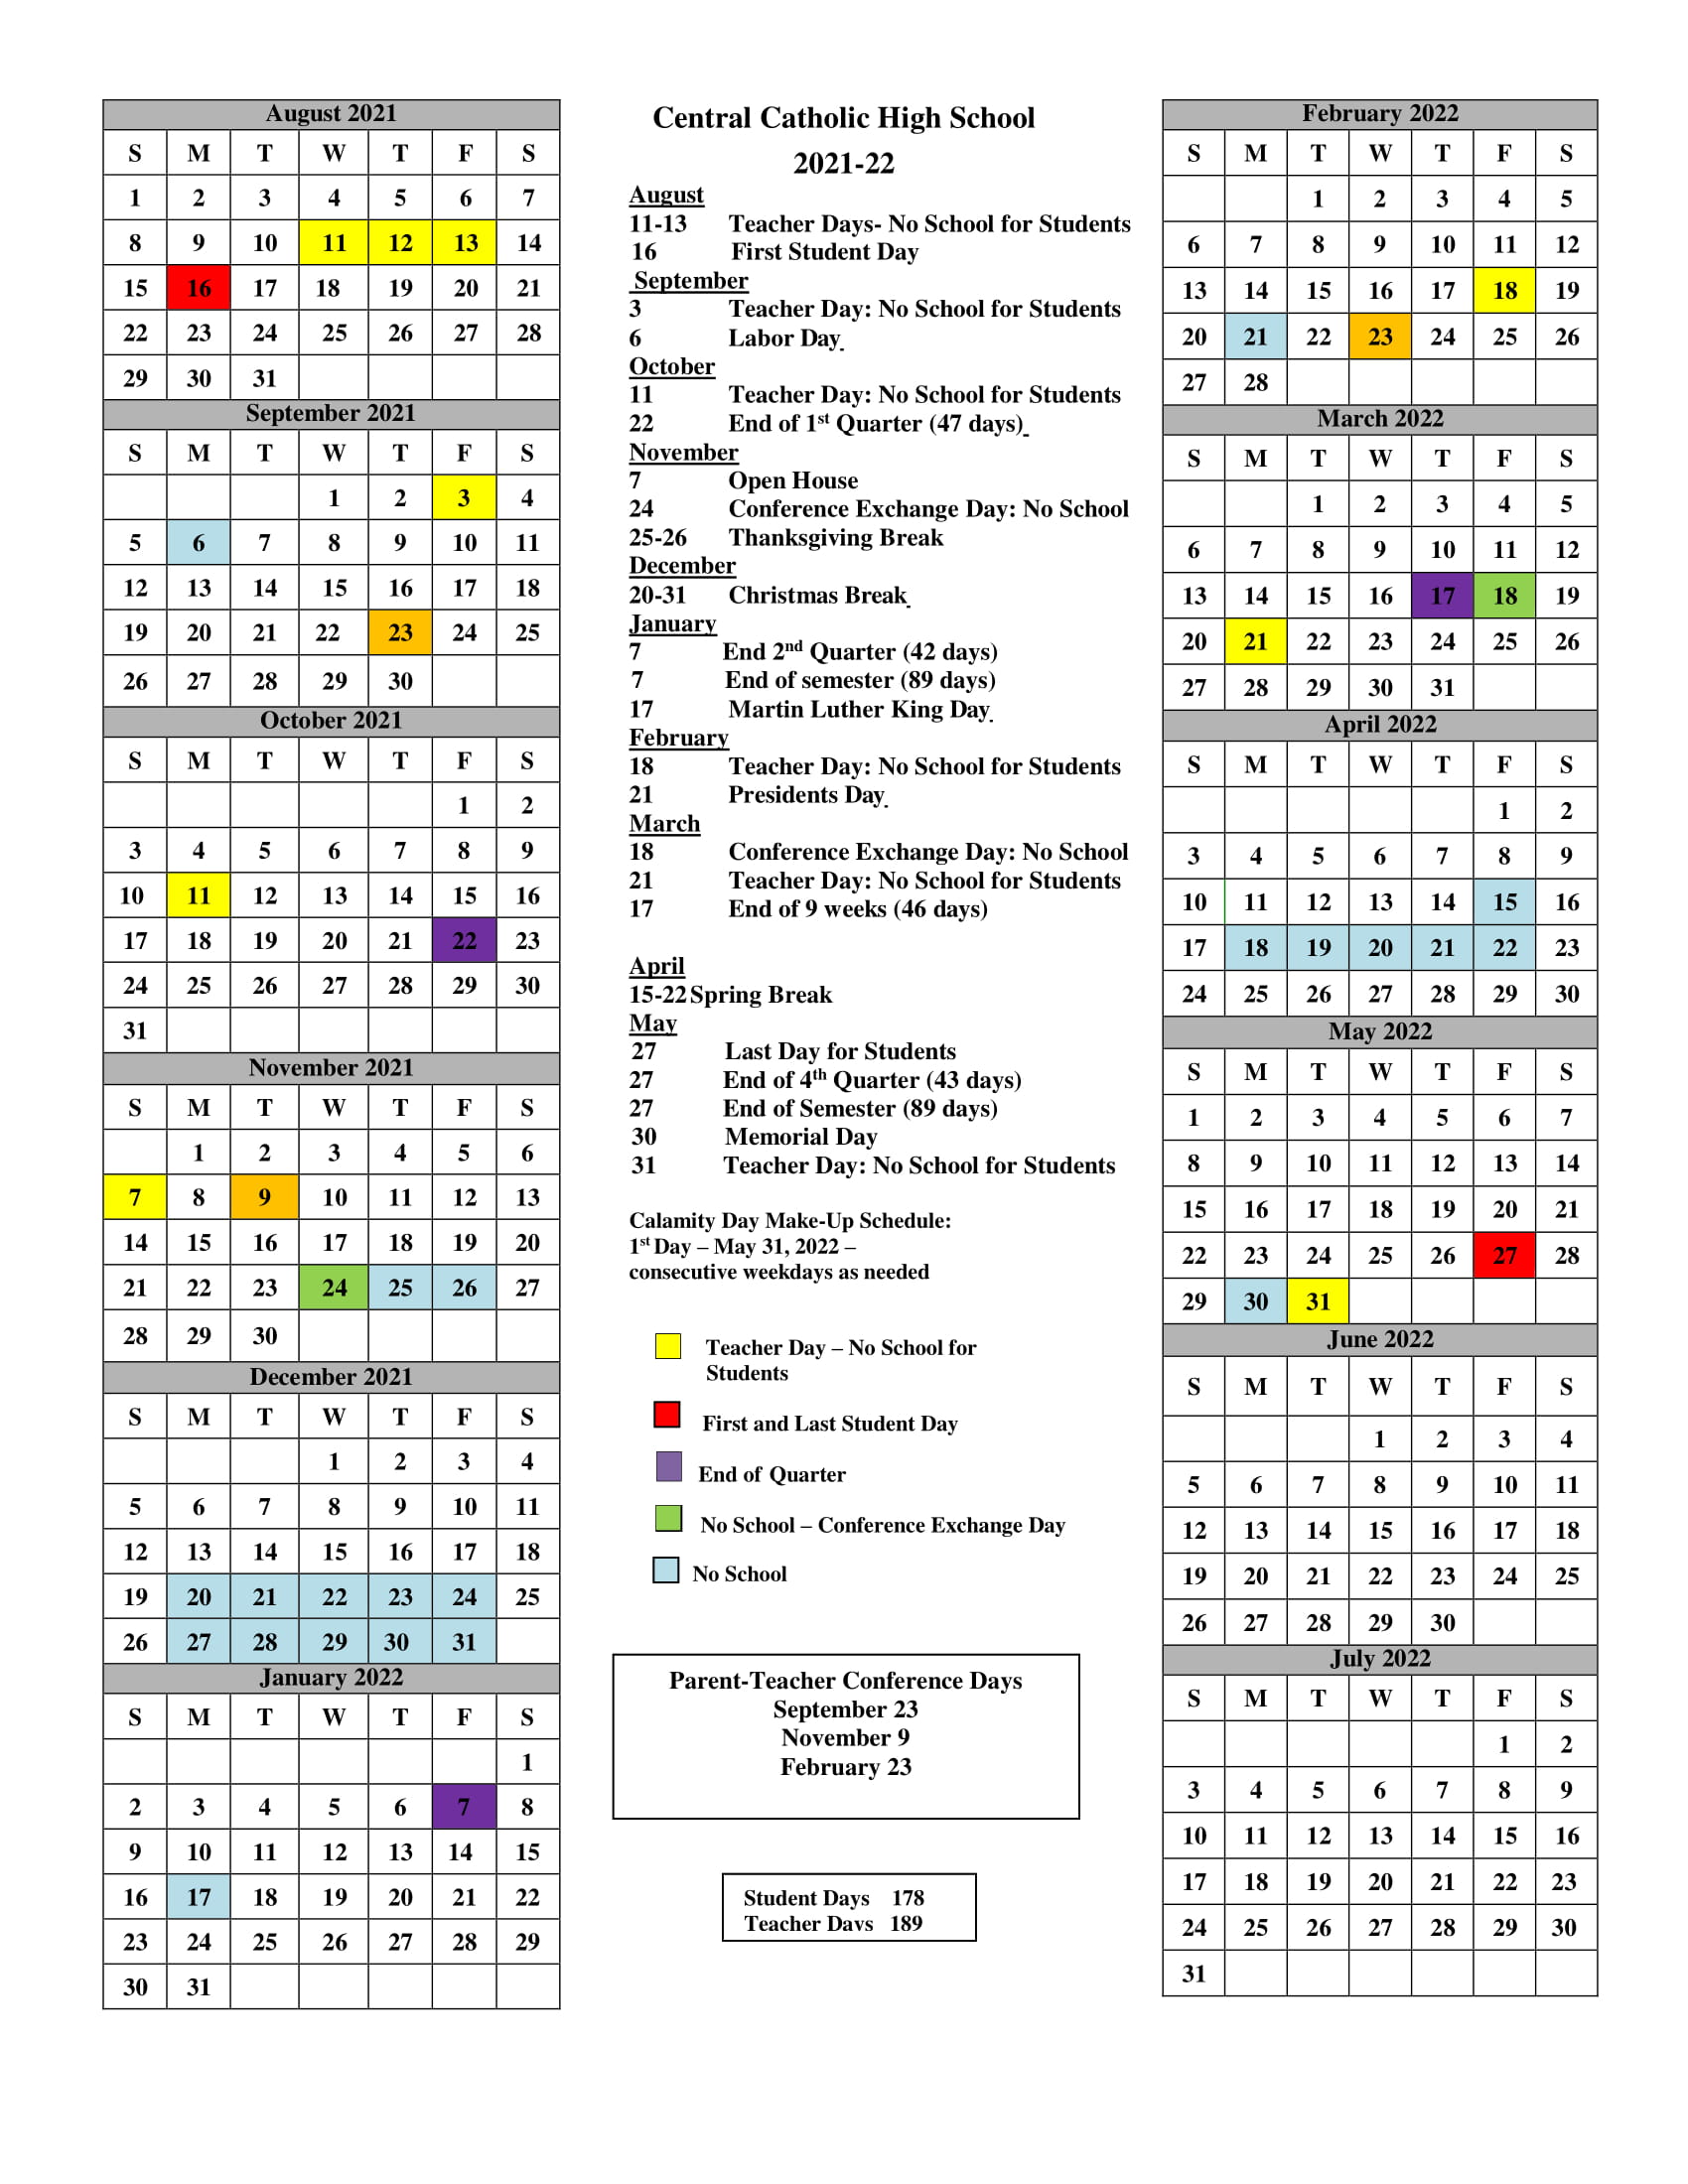 Ohio University Calendar 2022 23 Academic Calendar 2021-2022